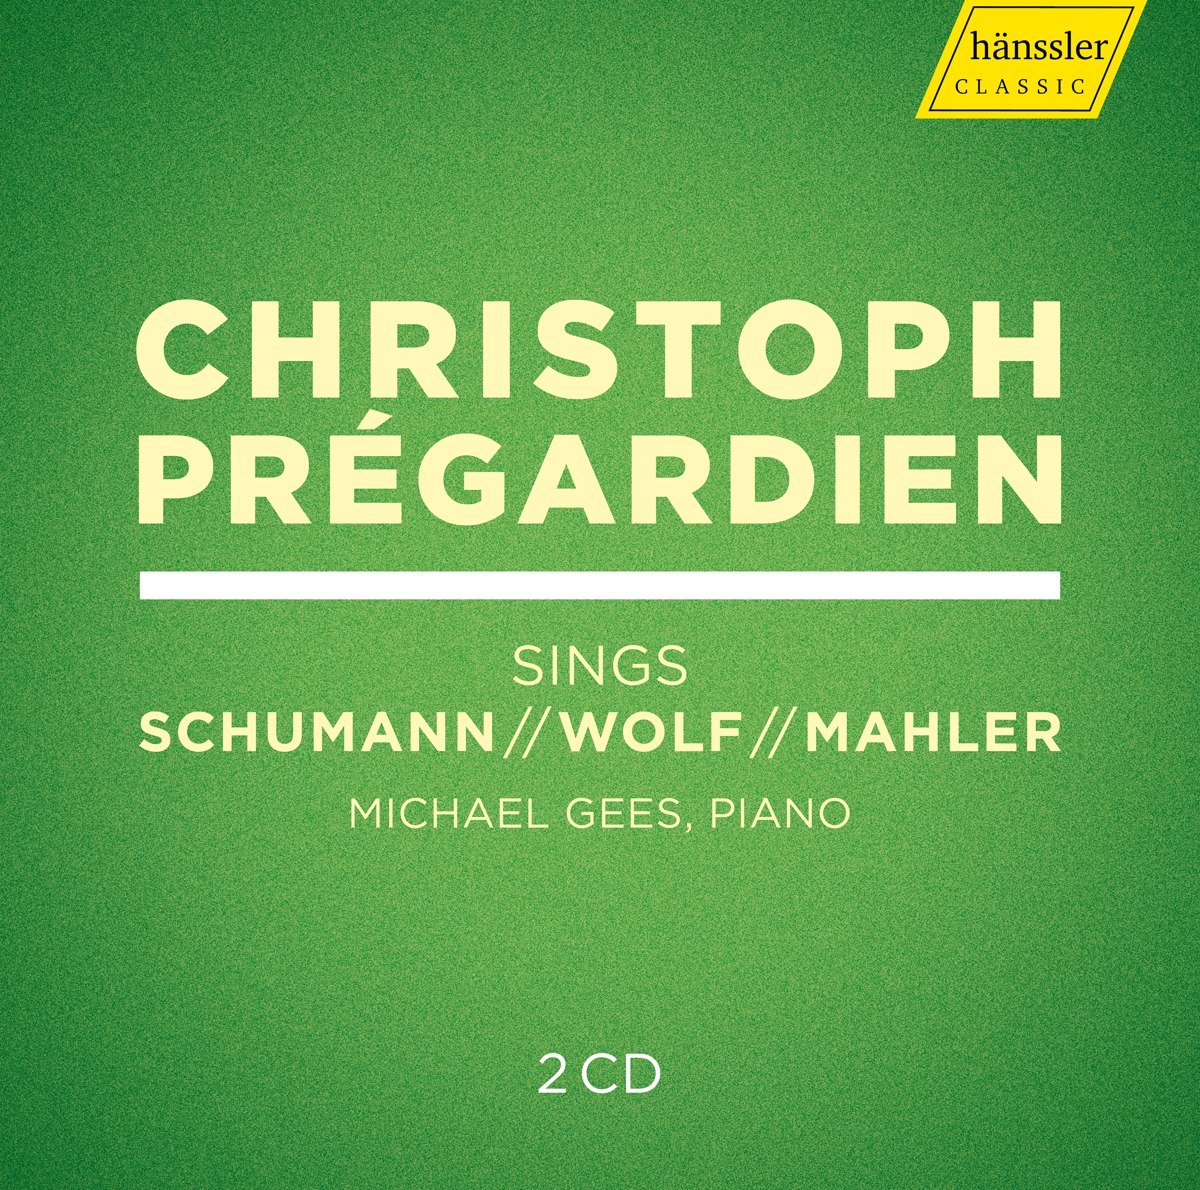 Christoph Prégardien sings Schumann